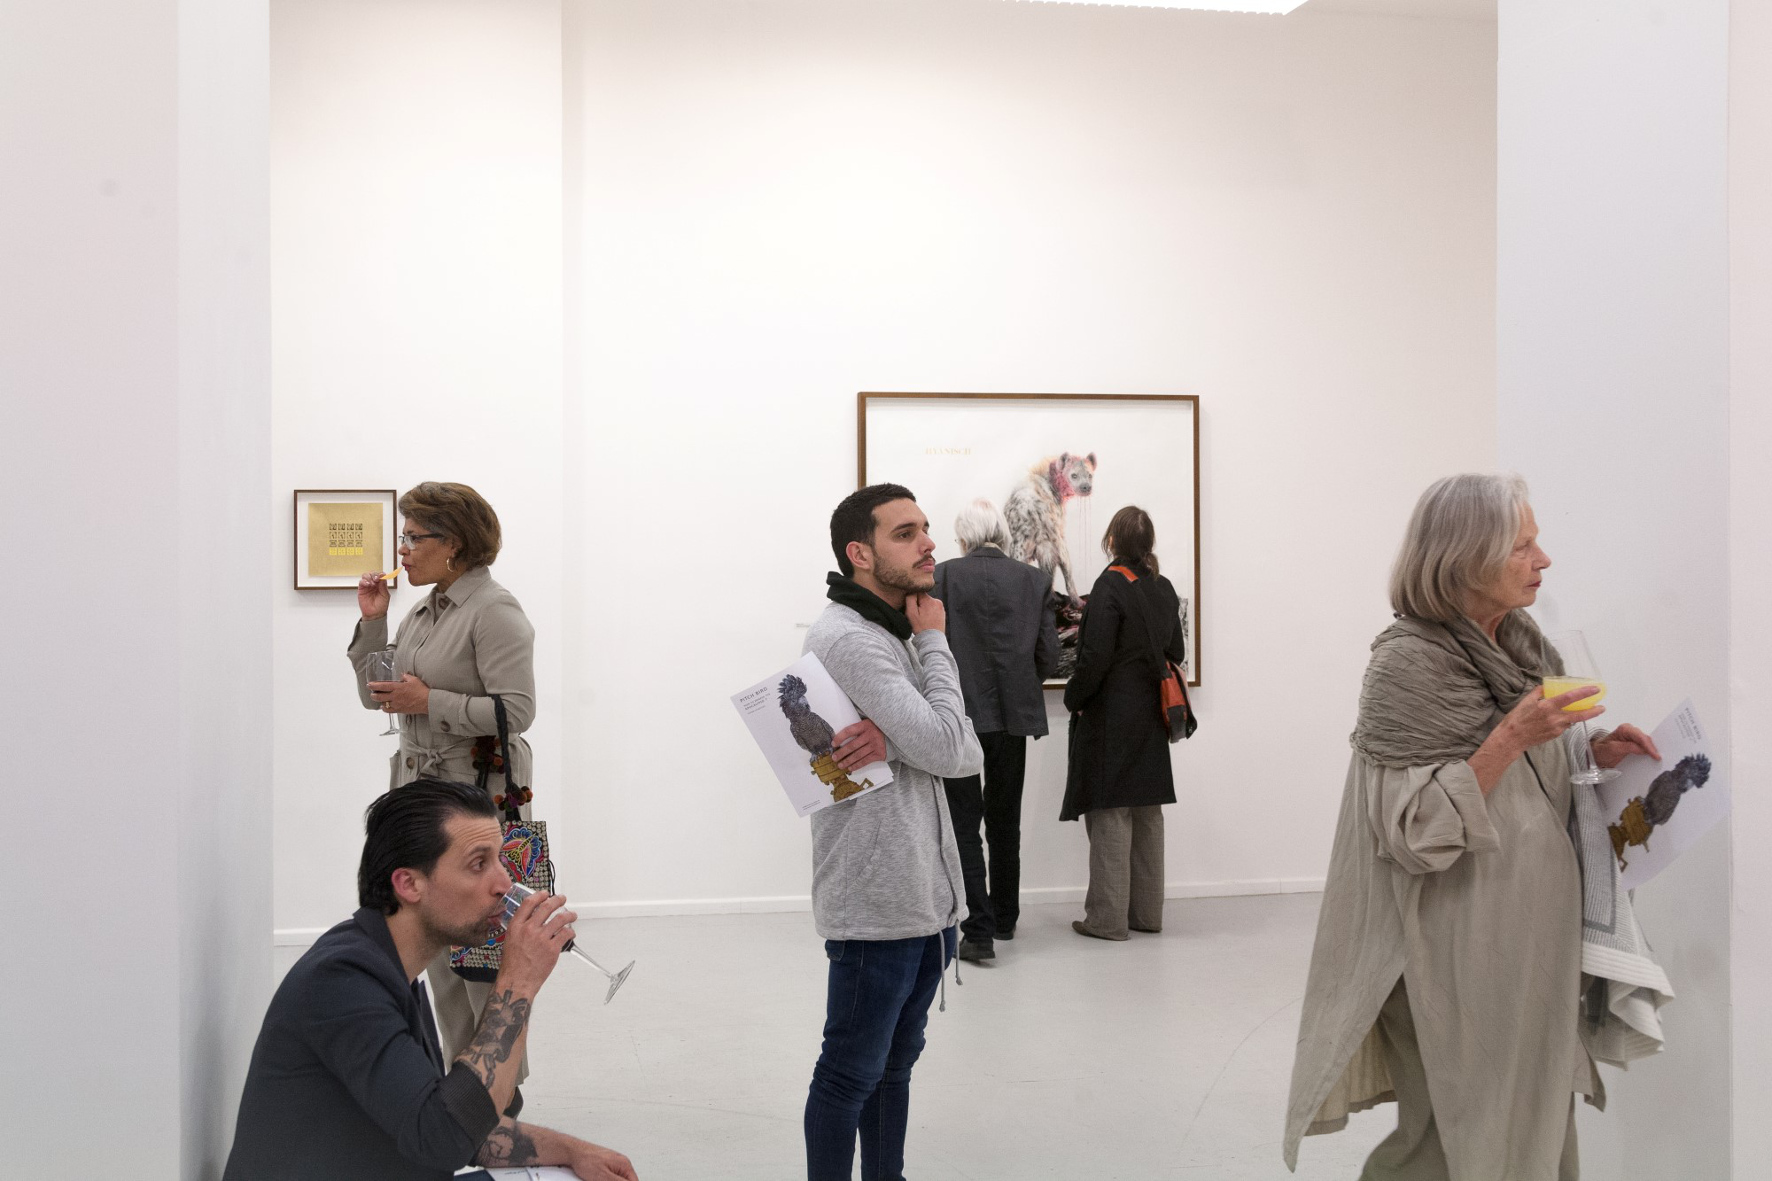 Exhibition Opening, Galerie Kuchling, Berlin, 2019
Karl-Marx Allee 123